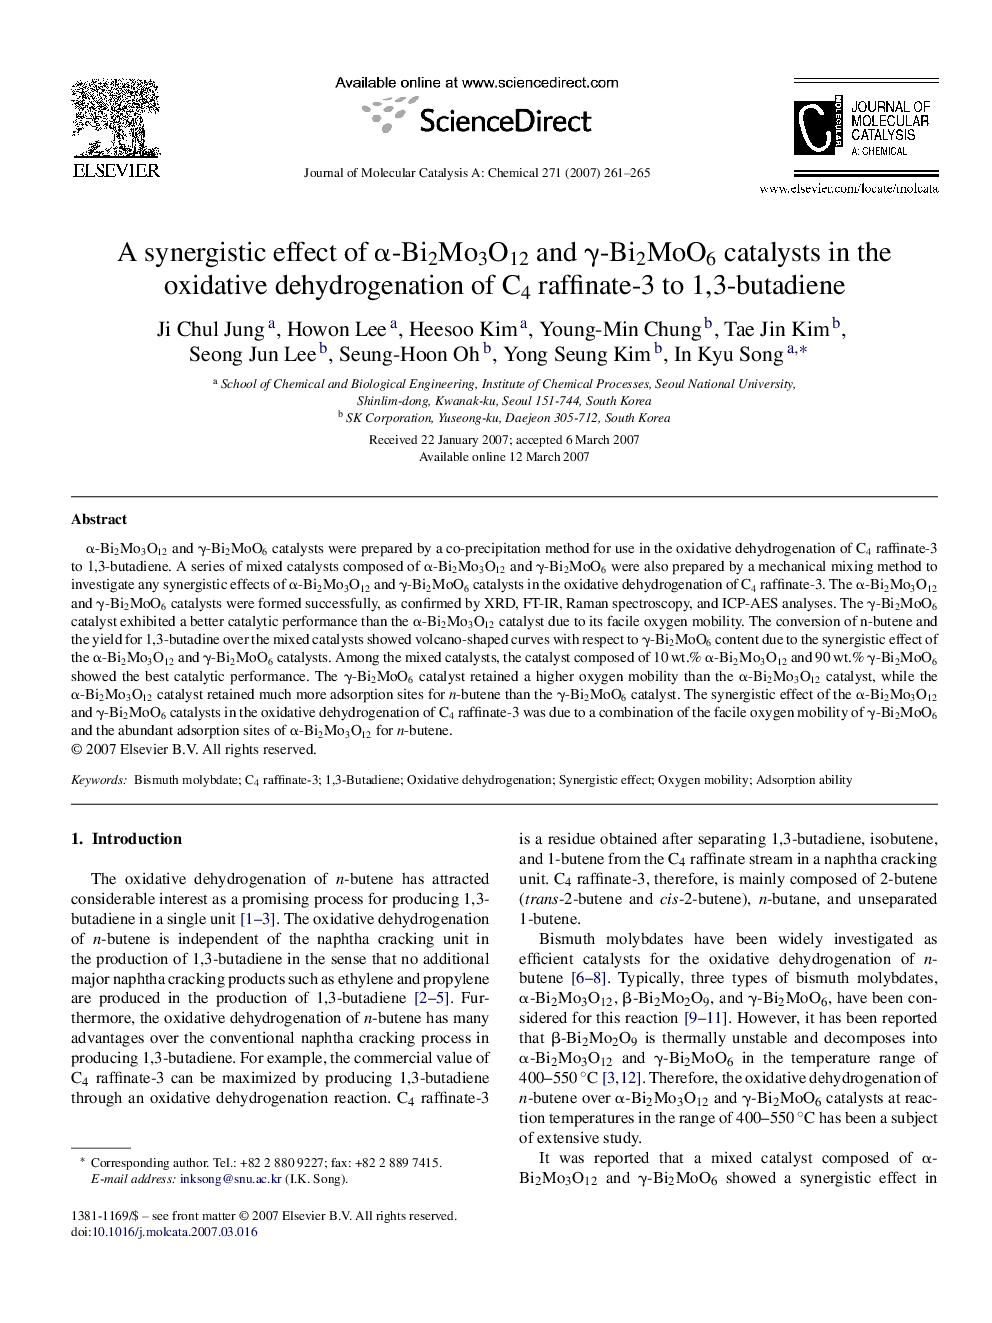 A synergistic effect of α-Bi2Mo3O12 and γ-Bi2MoO6 catalysts in the oxidative dehydrogenation of C4 raffinate-3 to 1,3-butadiene